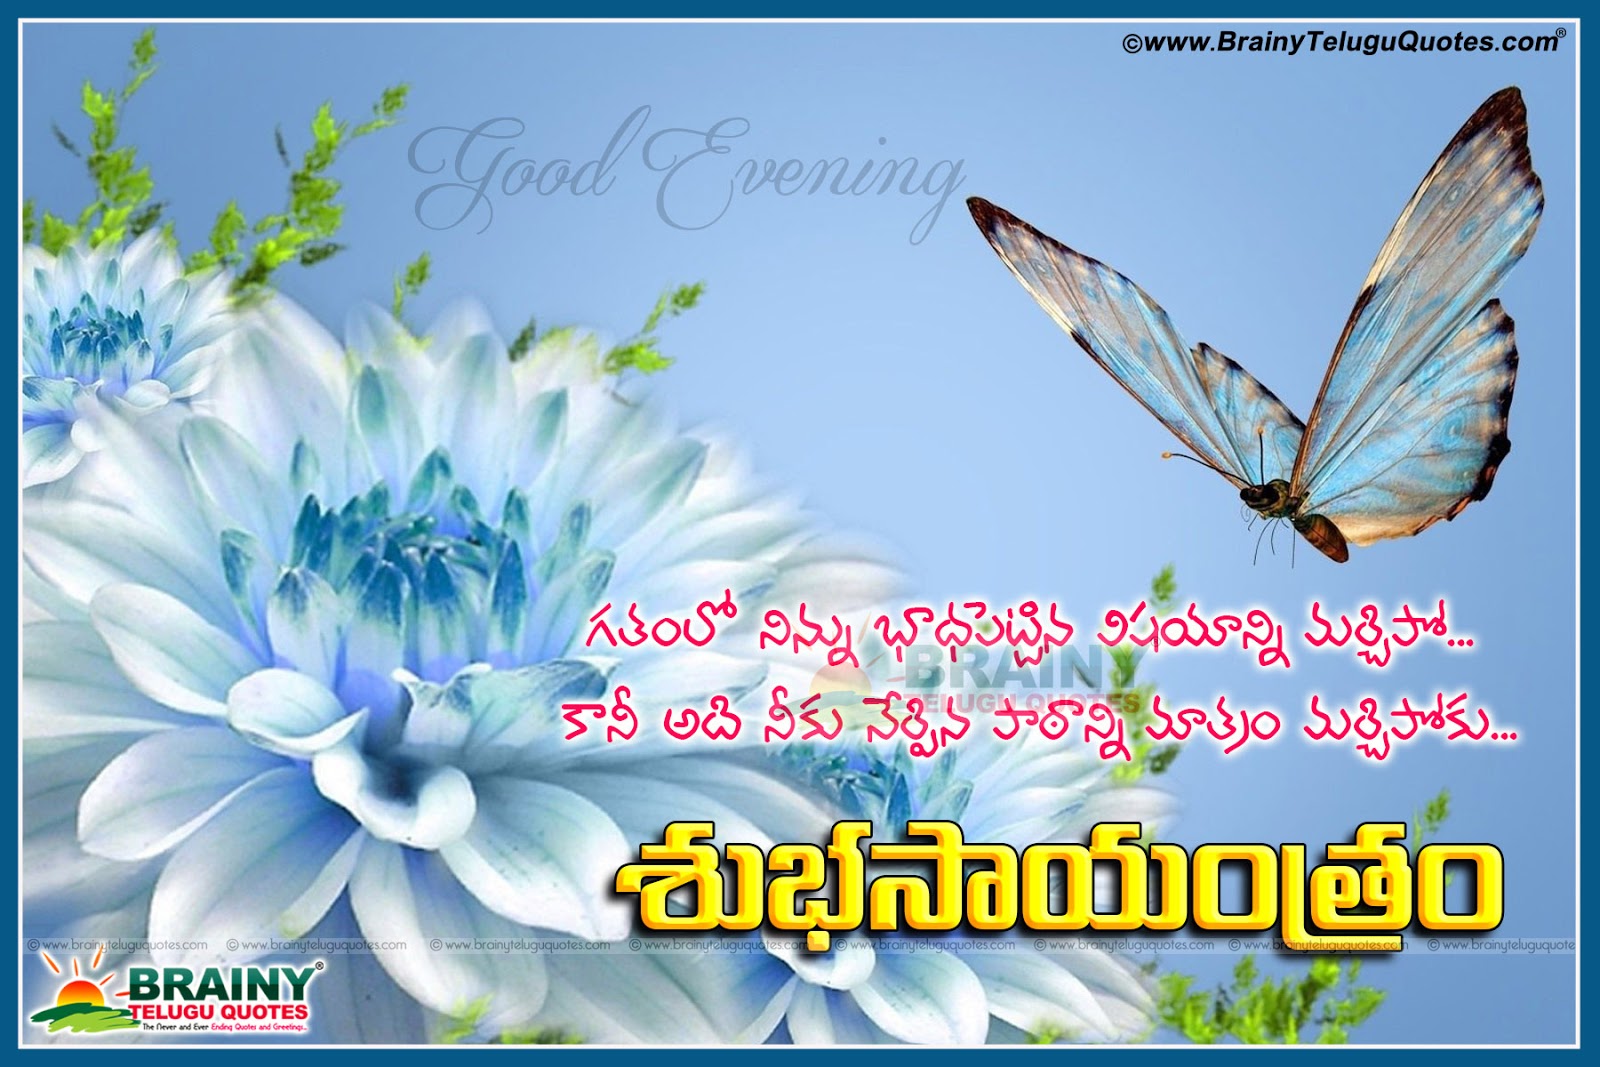 Imagenes De Good Morning Telugu Quotations Videos